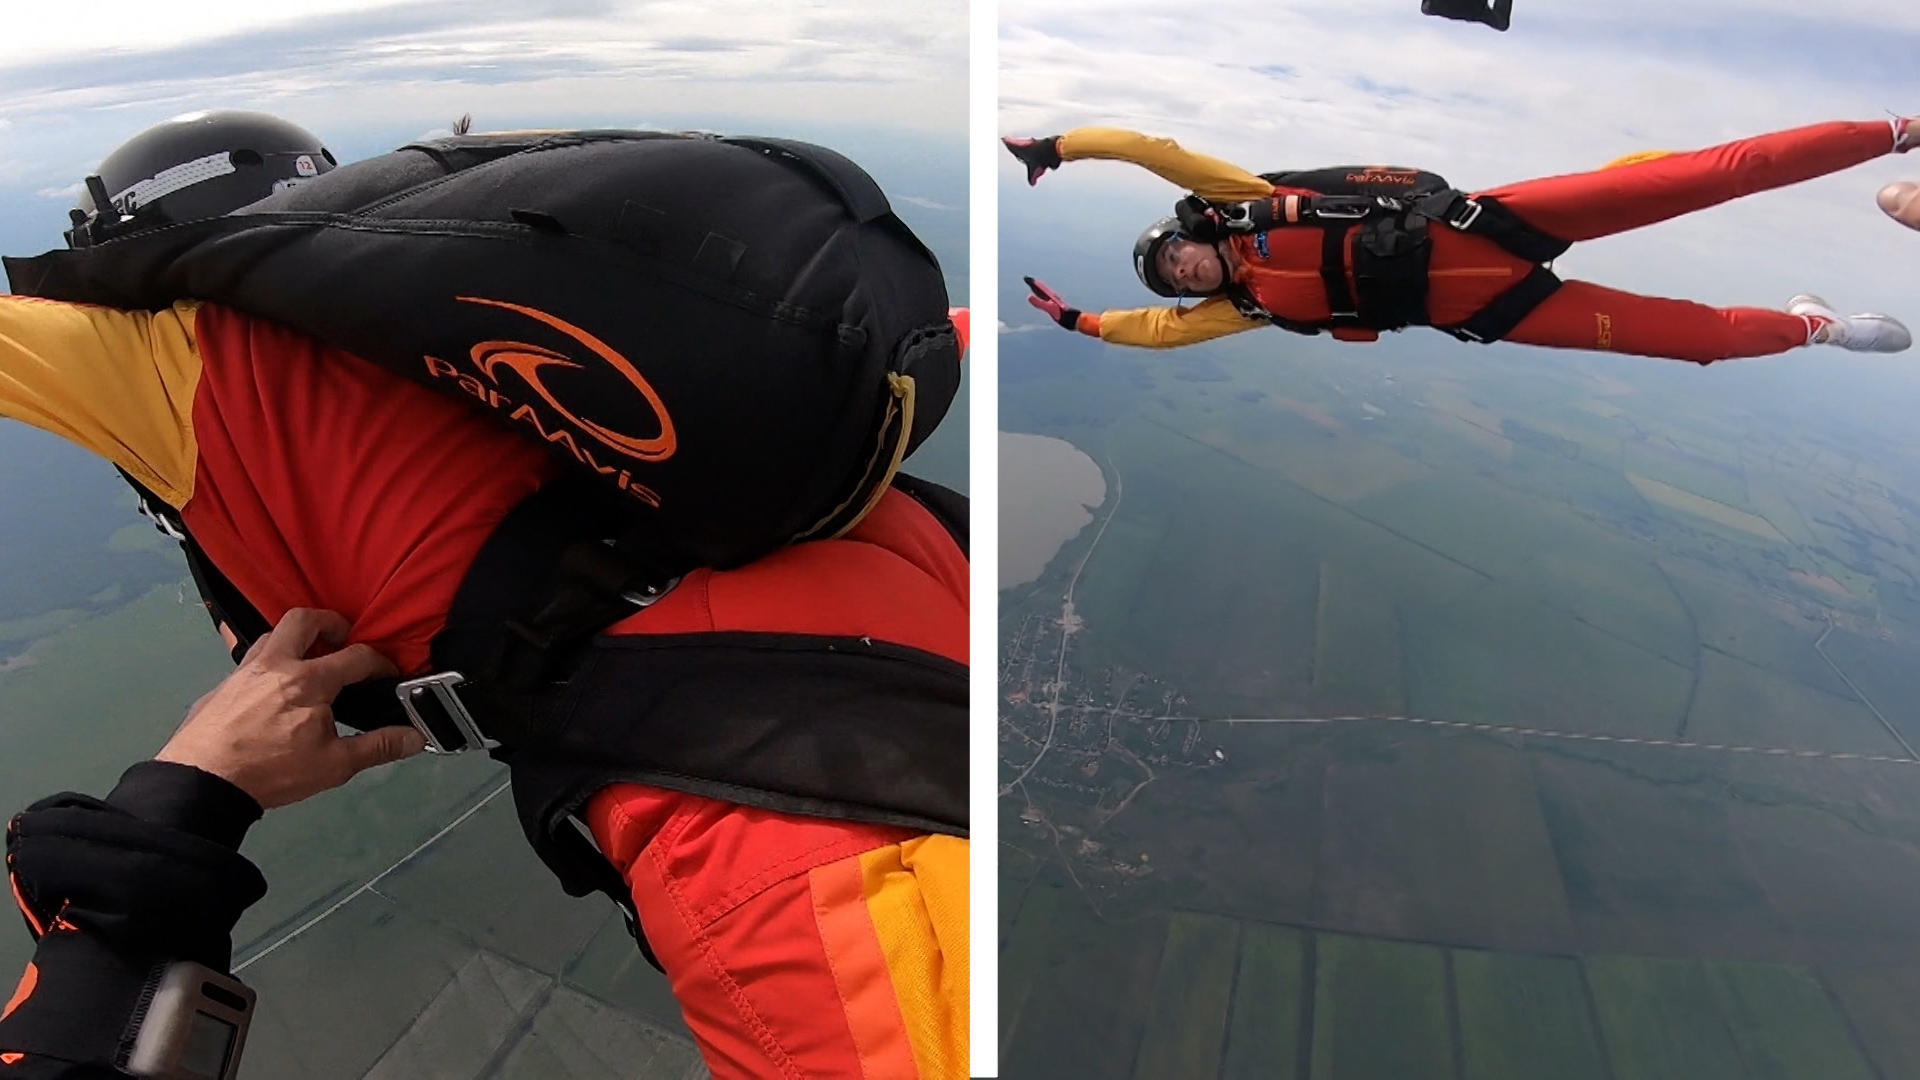 Mann rettet Fallschirmspringerin vor sicherem Tod Blitzschnell reagiert